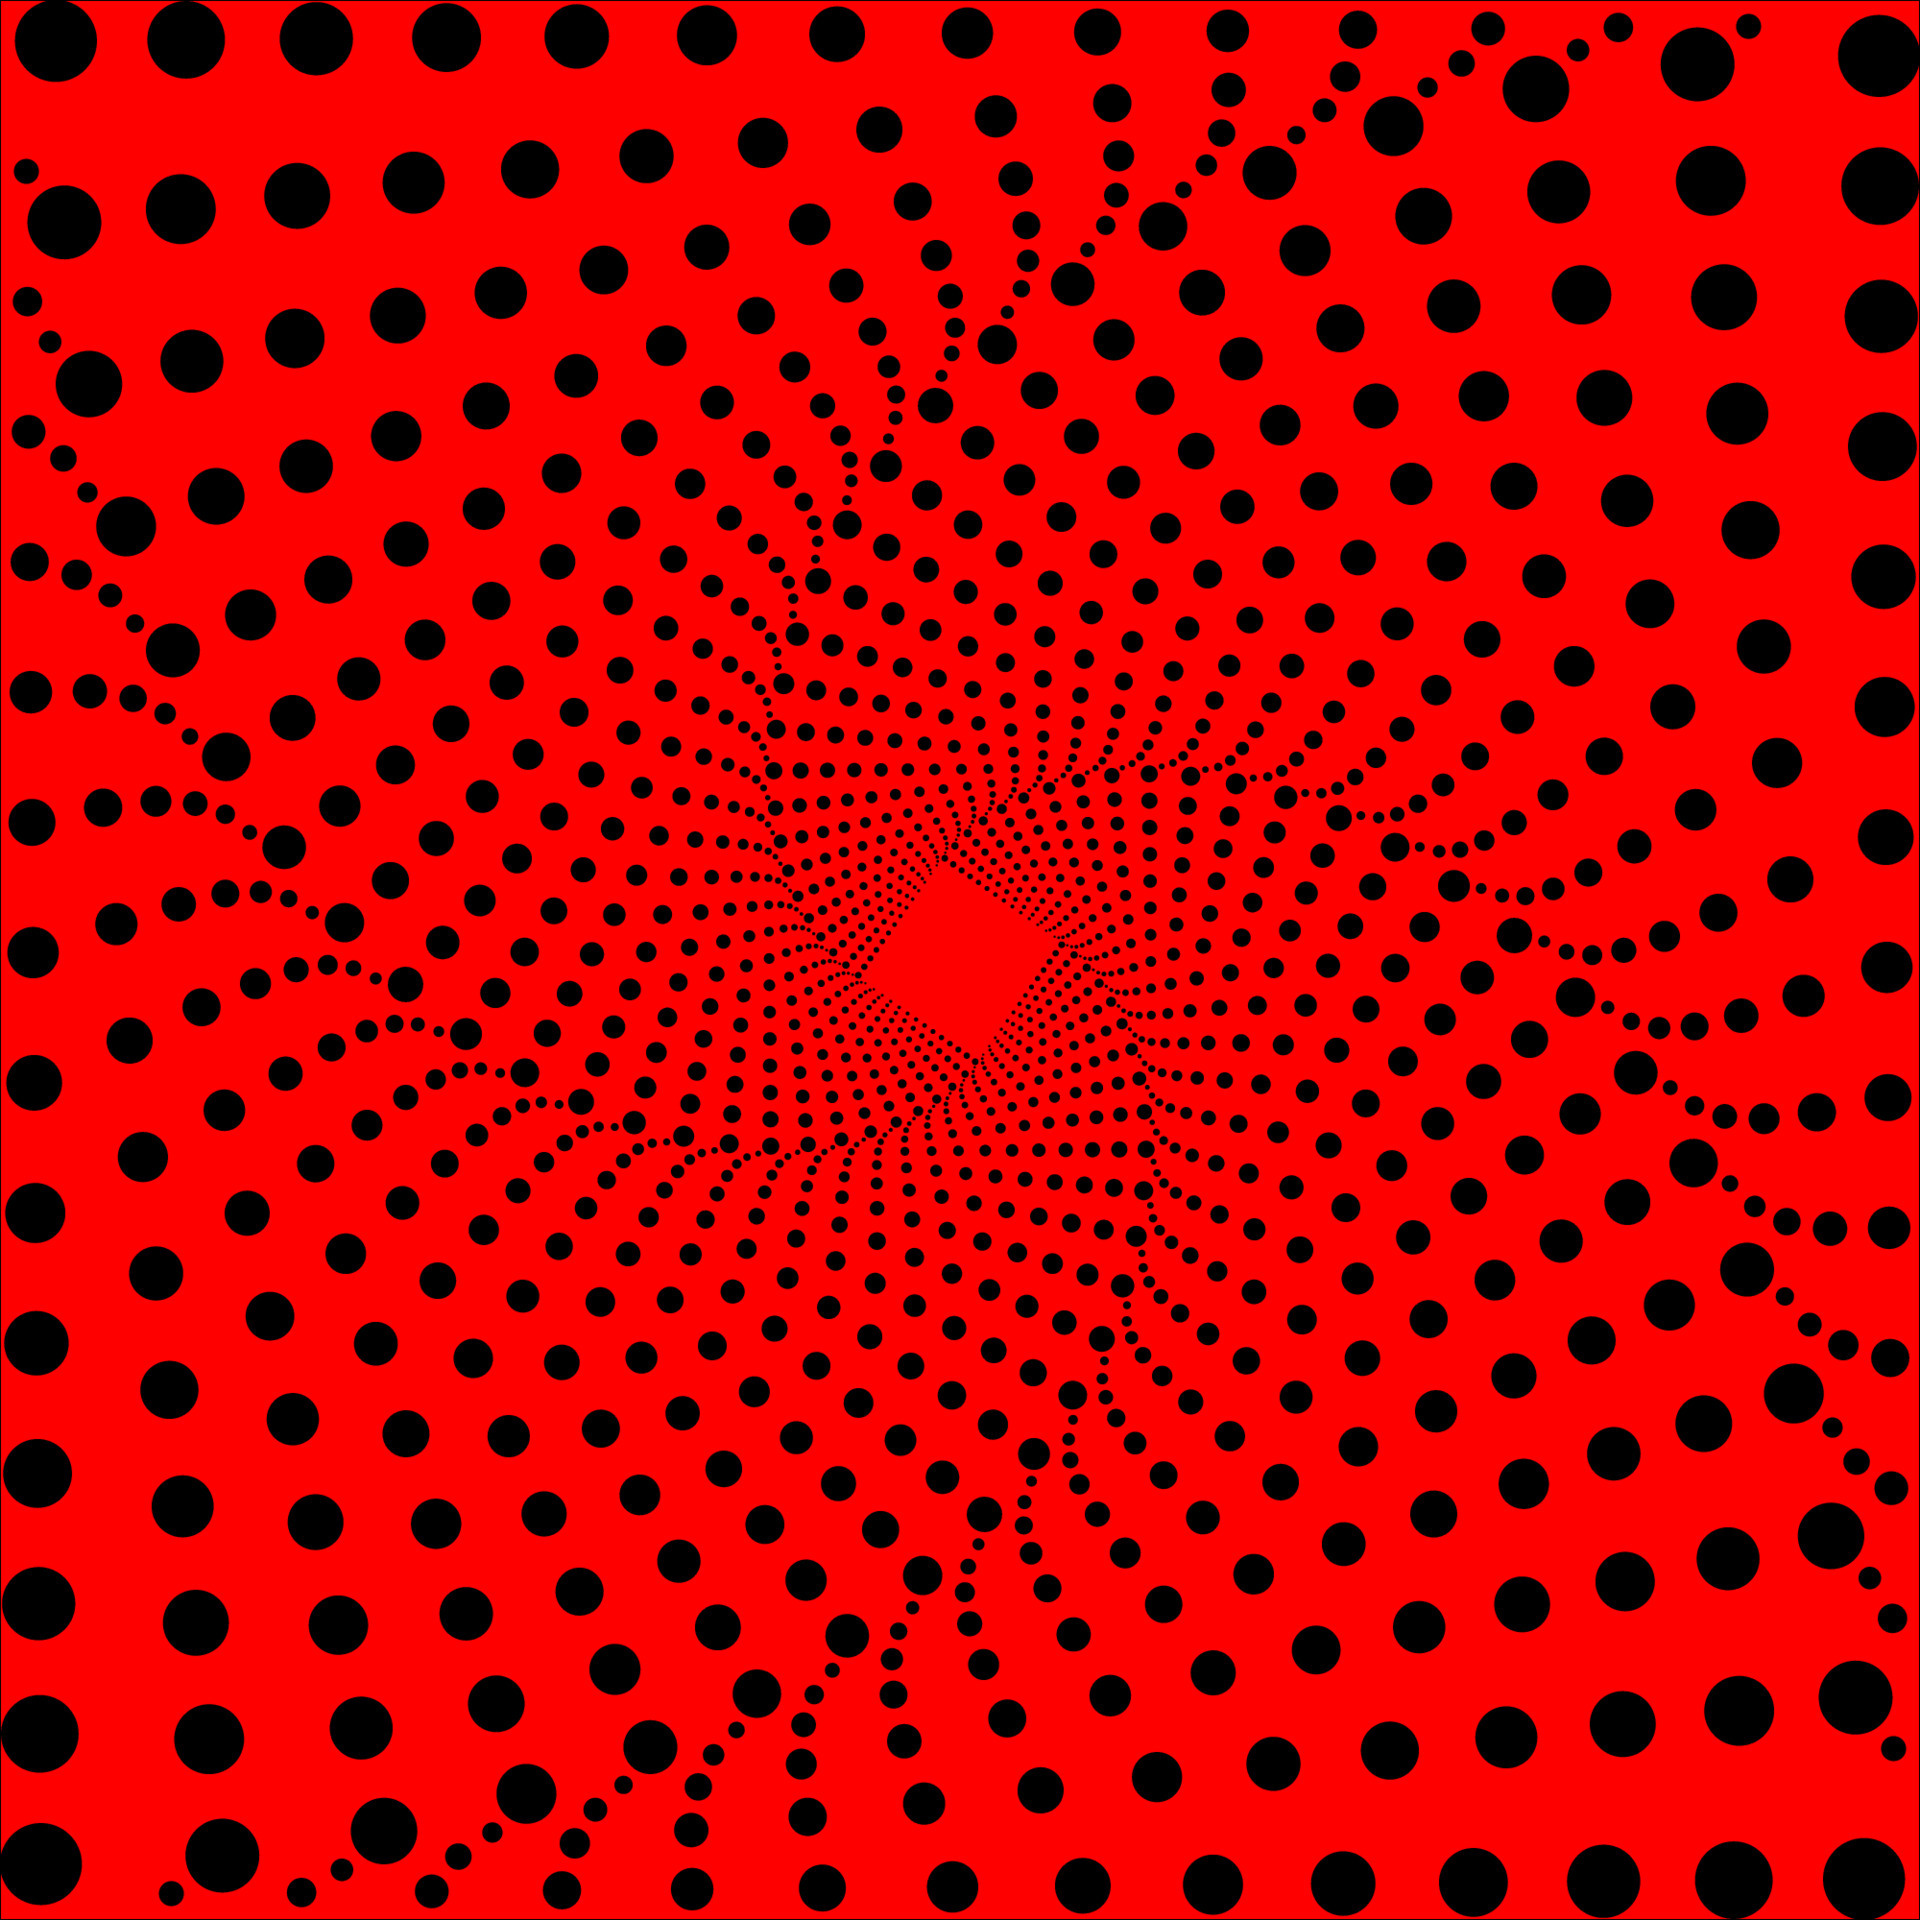 Fondos Negros Y Rojo fondo abstracto, gráfico futurista hipster moderno. fondo rojo con puntos  negros. fondo abstracto vectorial, diseño de textura, patrón. 7742760  Vector en Vecteezy